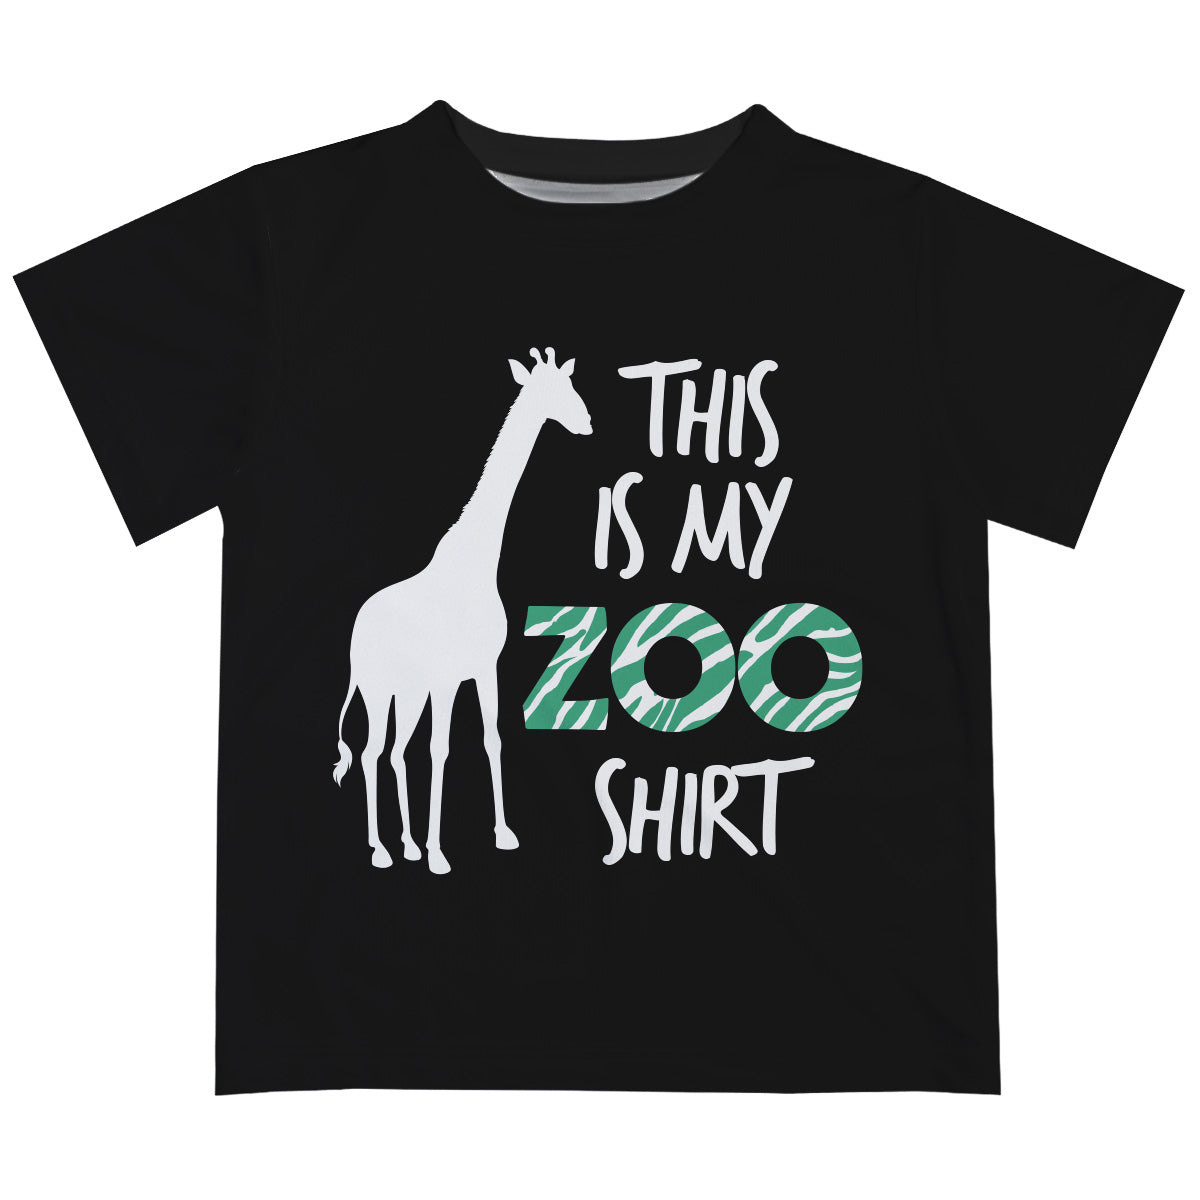 This Is My Zoo Black Short Sleeve Tee Shirt